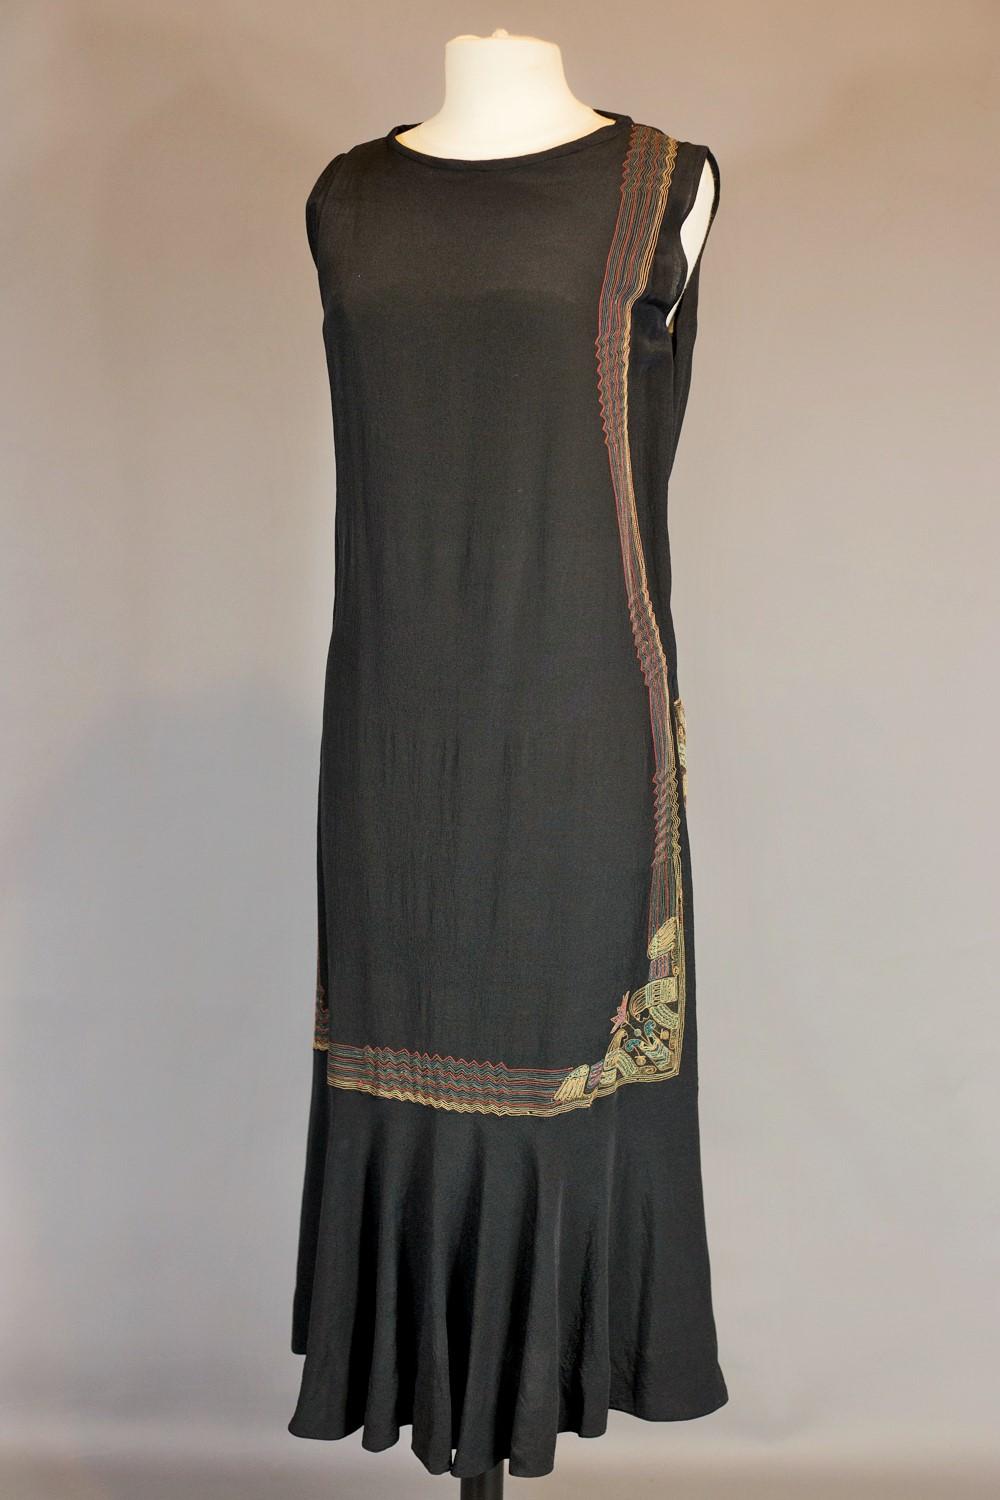 A French Egyptomania Dress In Embroidered Black Crepe silk- Circa 1930 For Sale 4